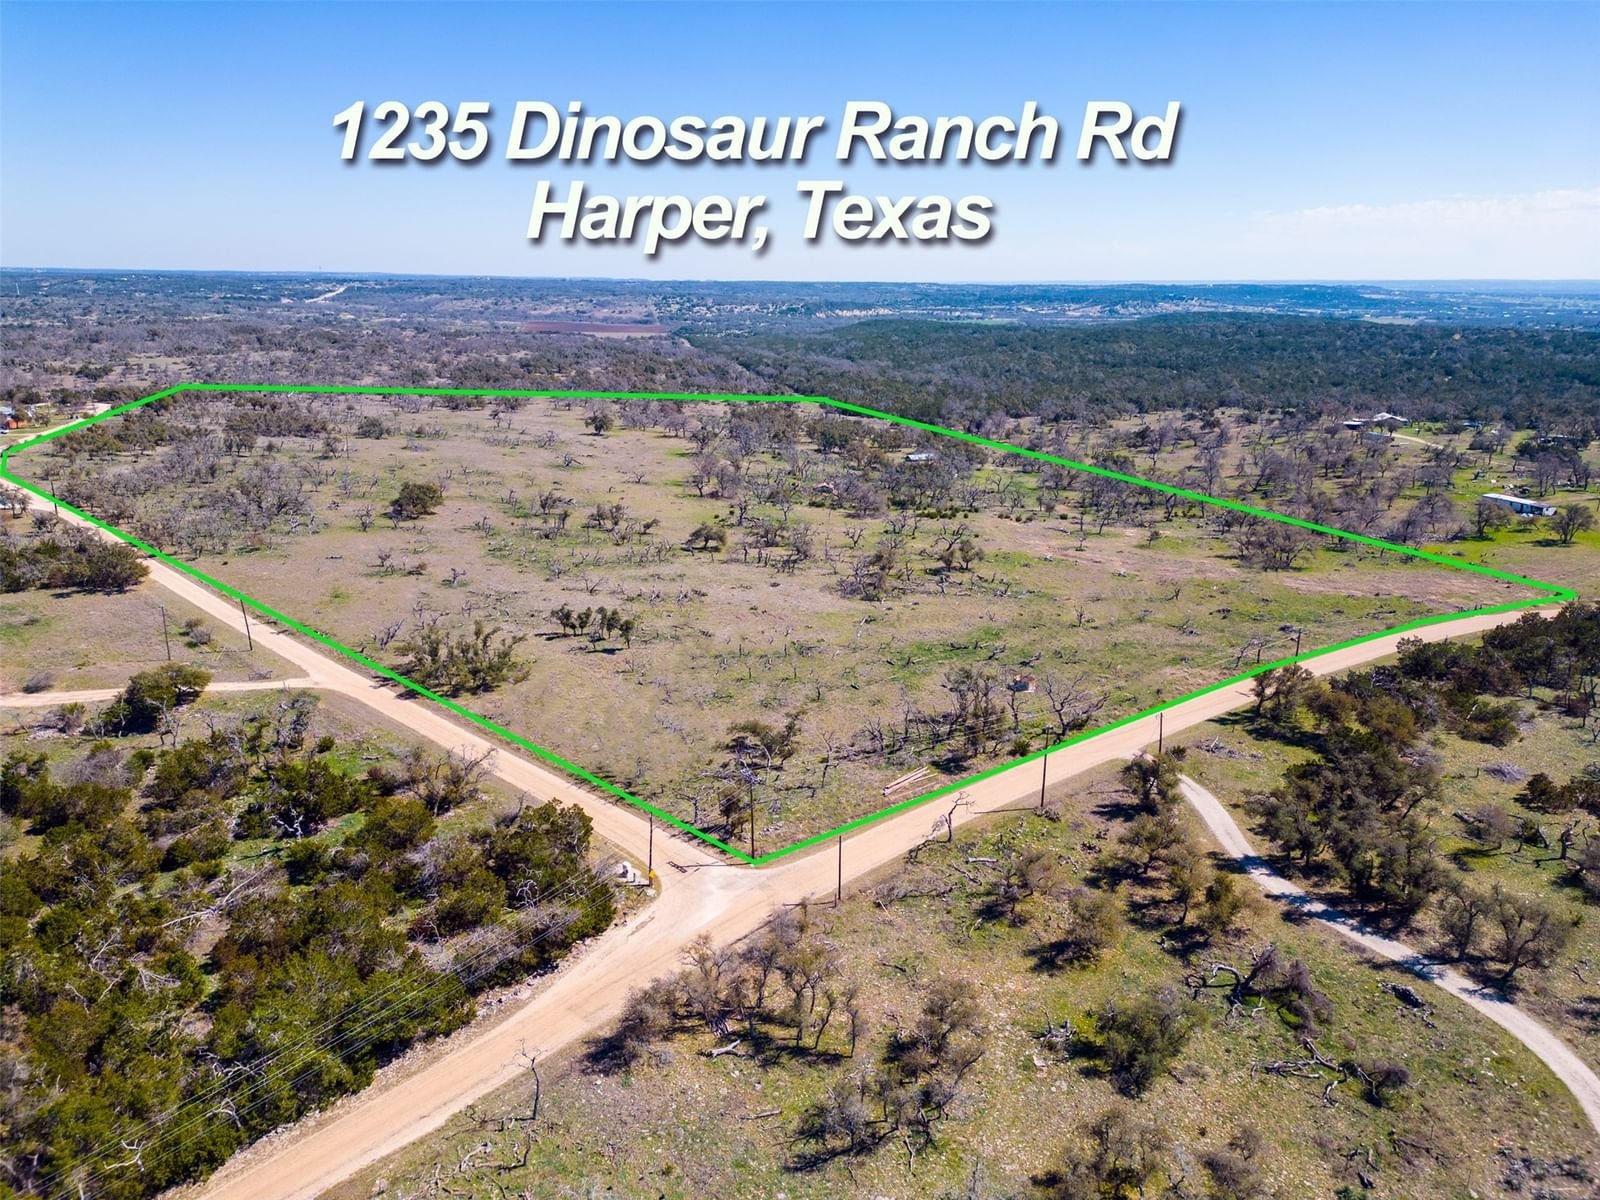 Real estate property located at 1235 Dinosaur Ranch, Gillespie, Dinosaur Rch, Harper, TX, US